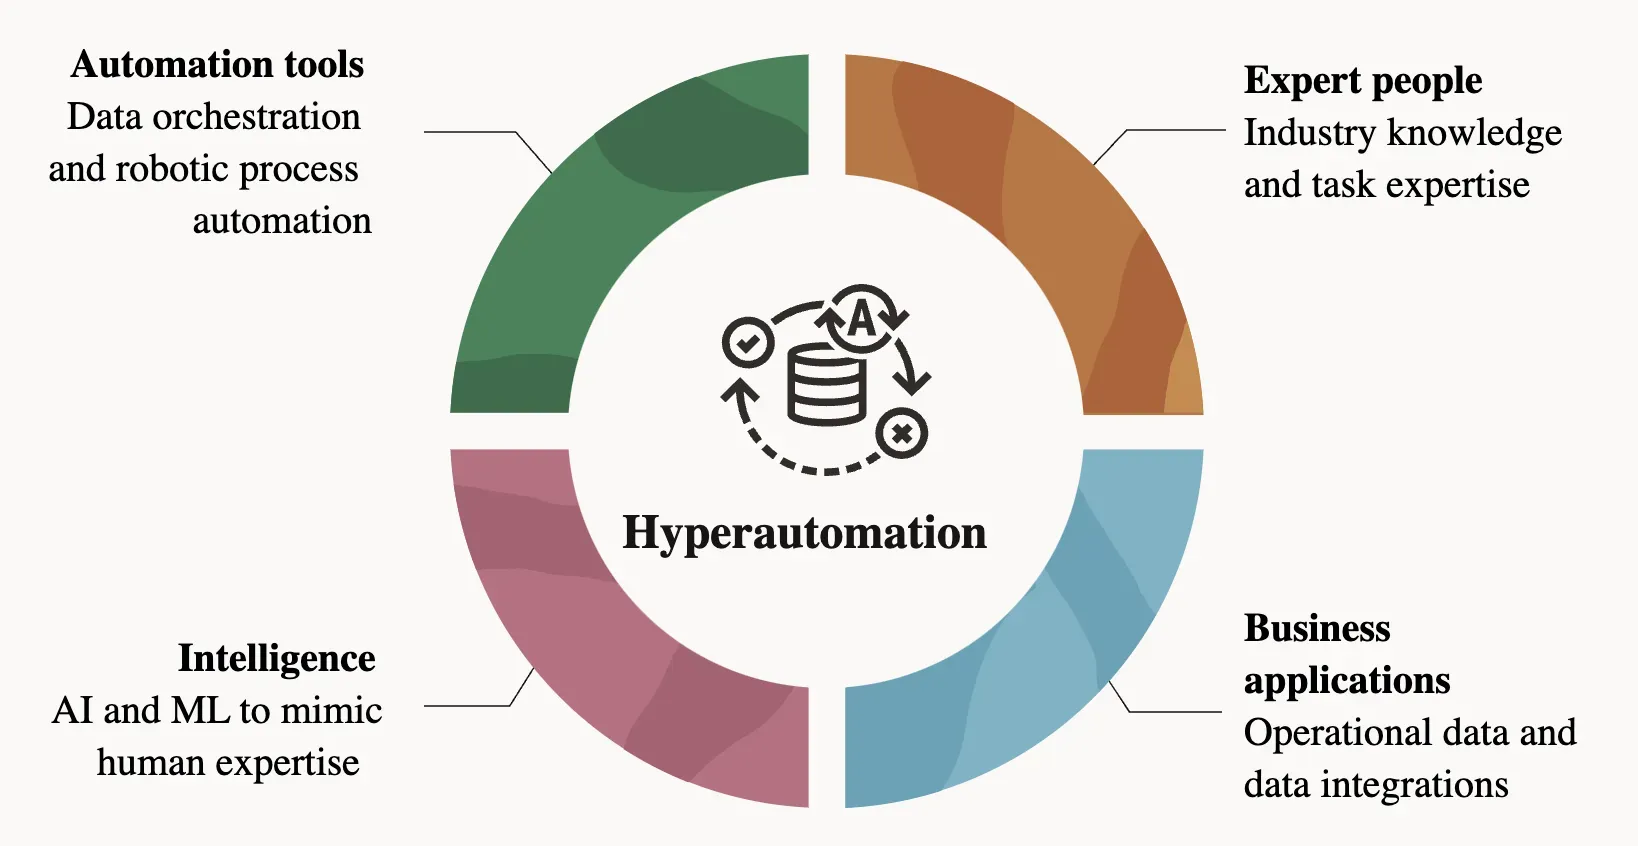 Benefits of hyperautomation